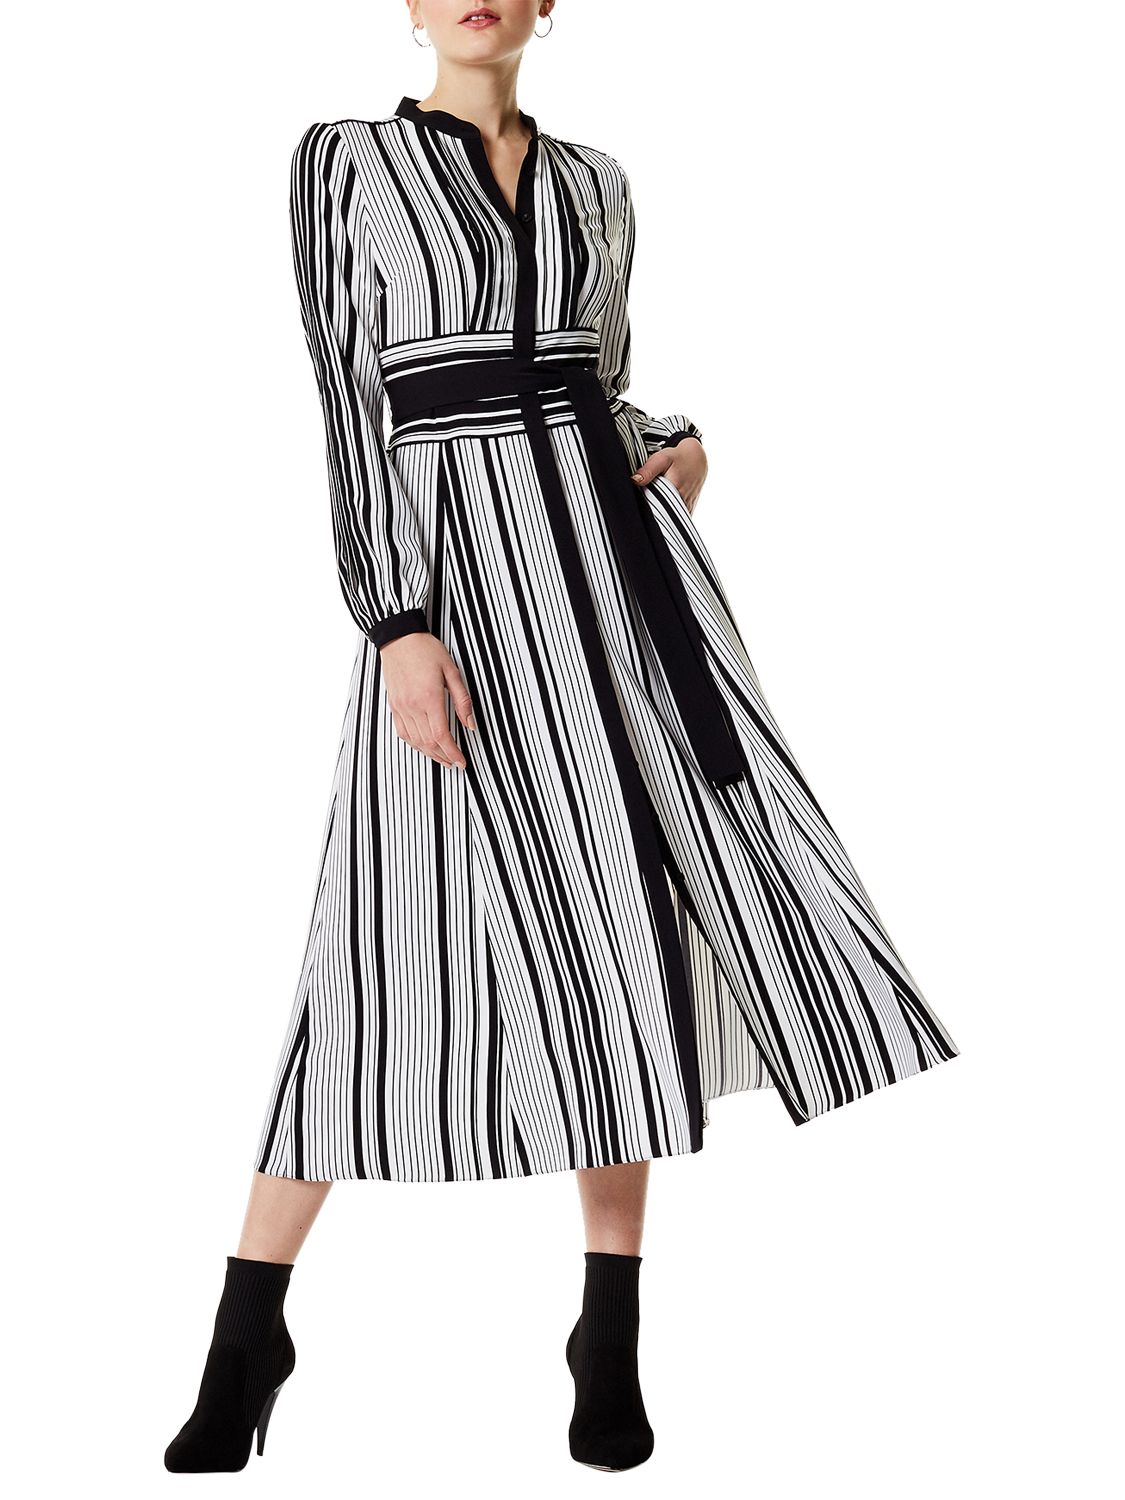 Karen Millen Graphic Stripe Midi Dress, Black/White